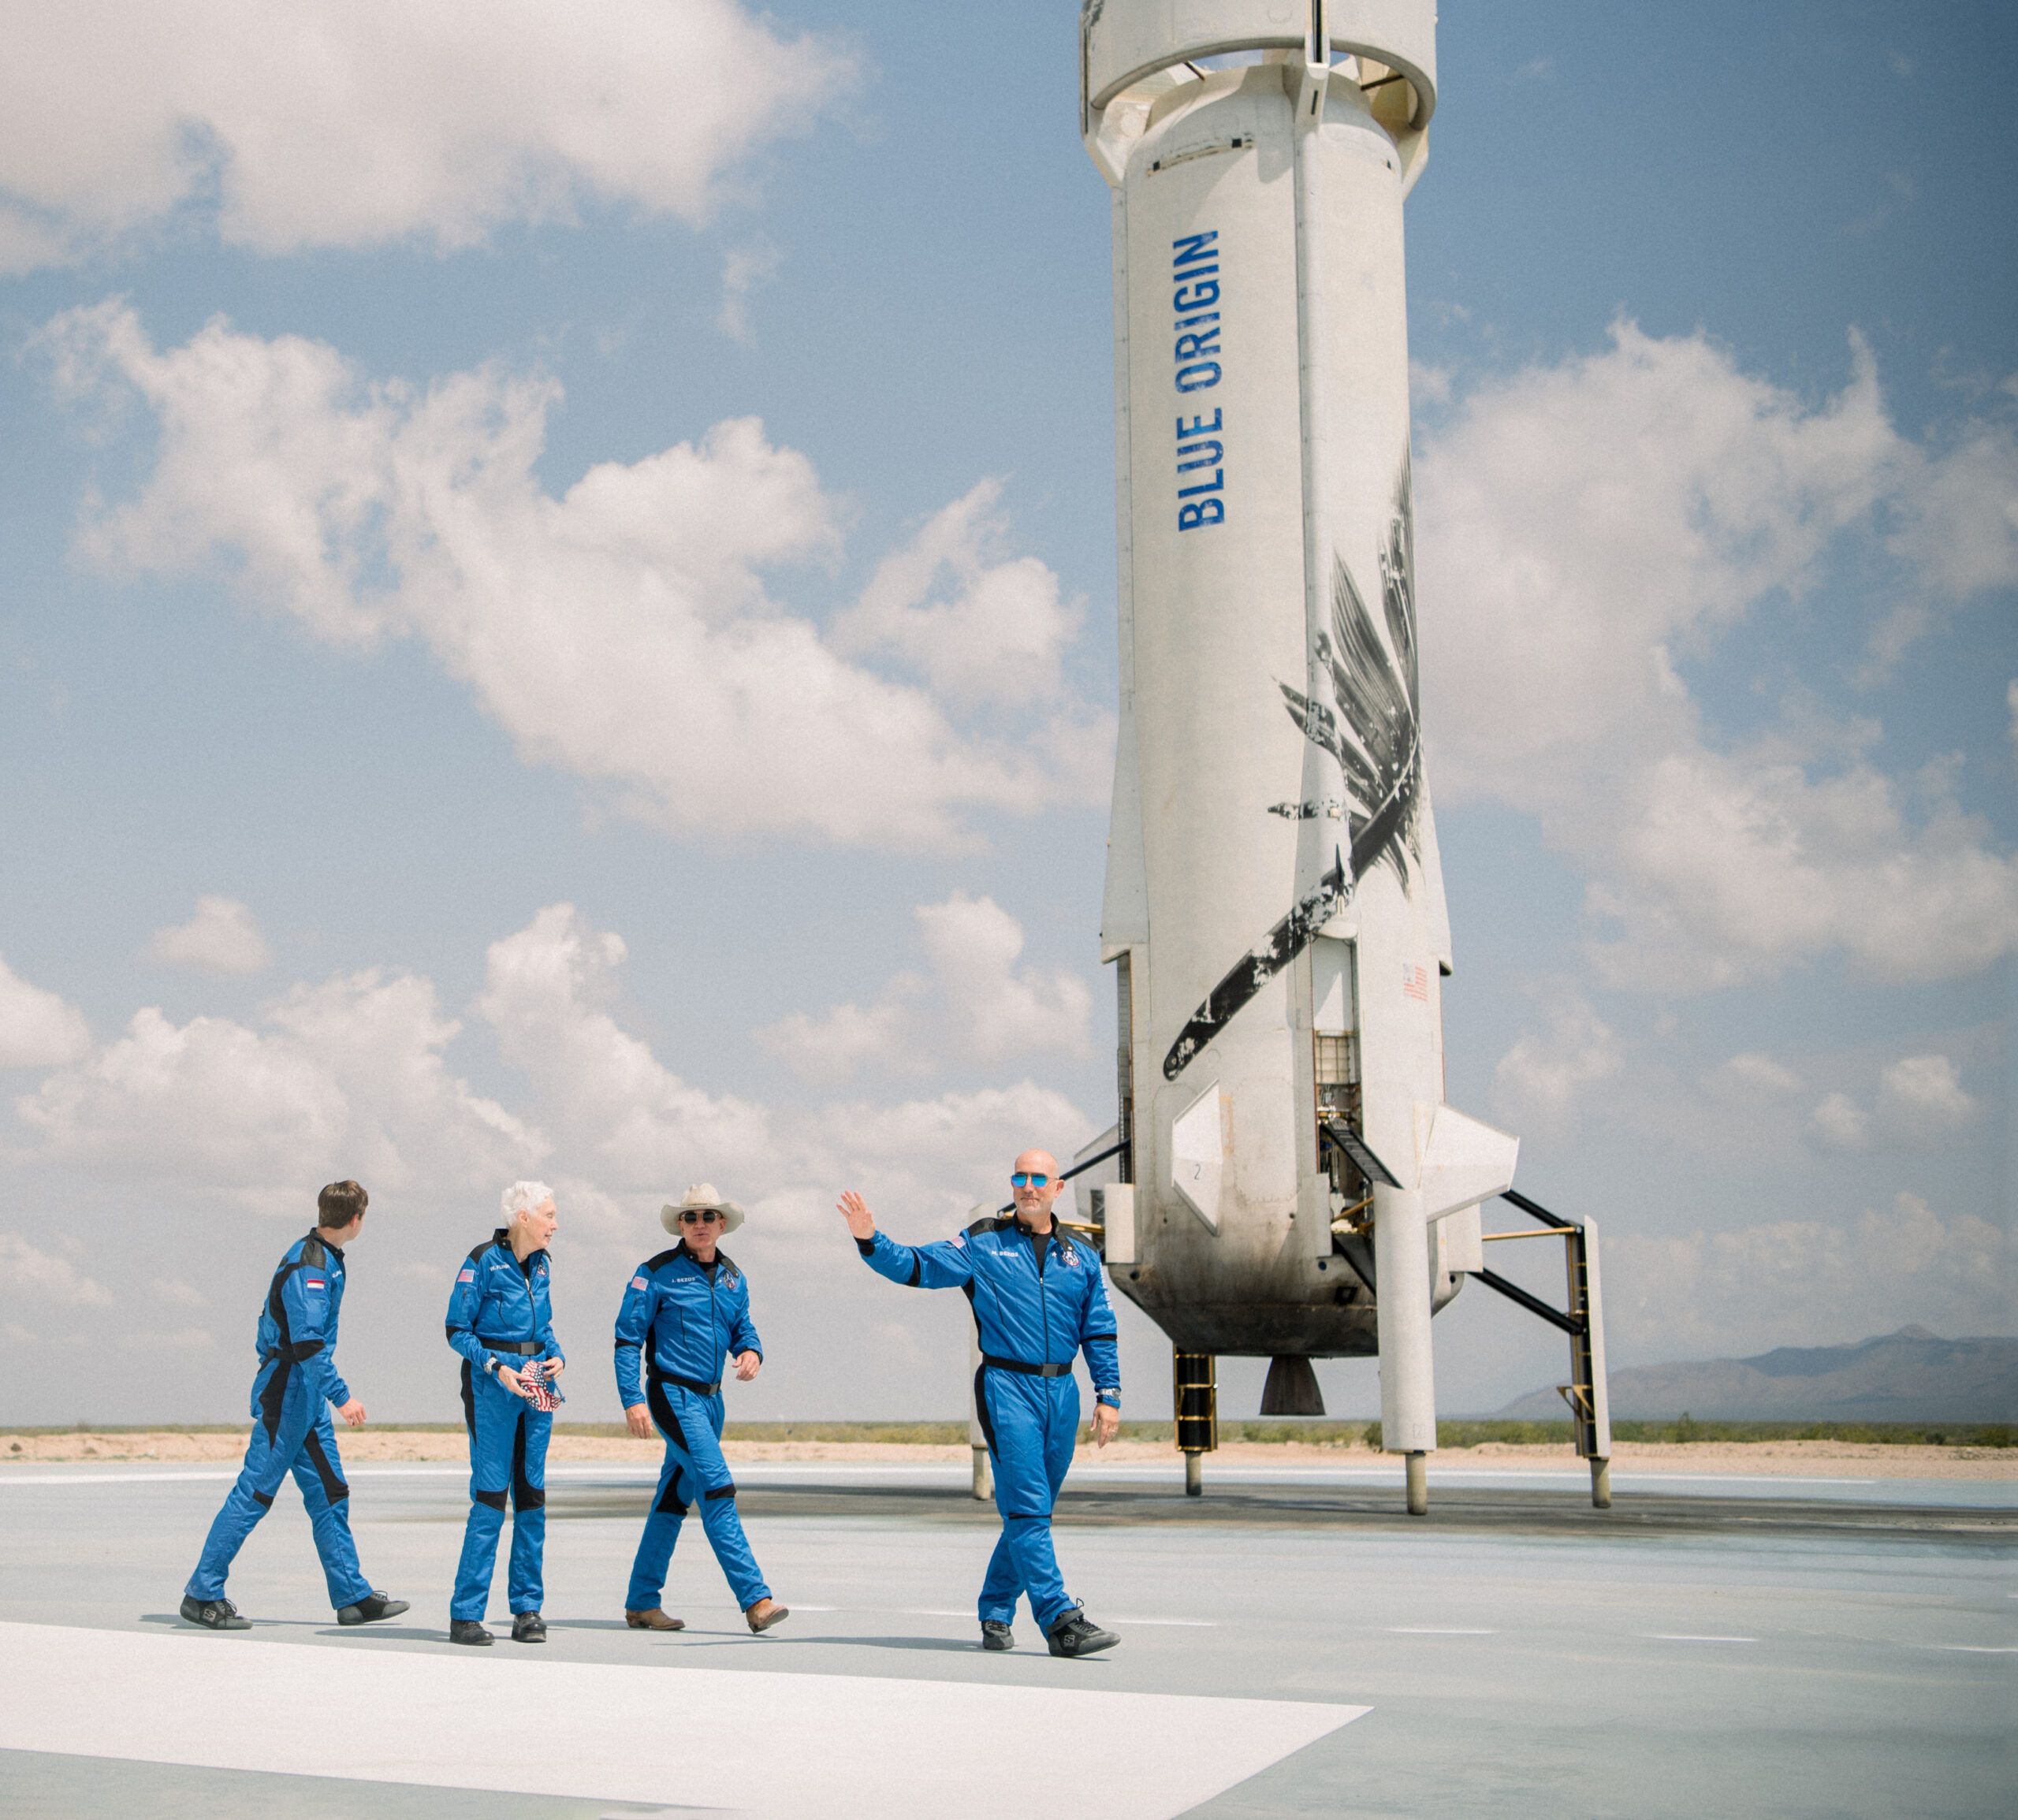 Jeff Bezos completes flight to edge of space aboard Blue Origin rocket